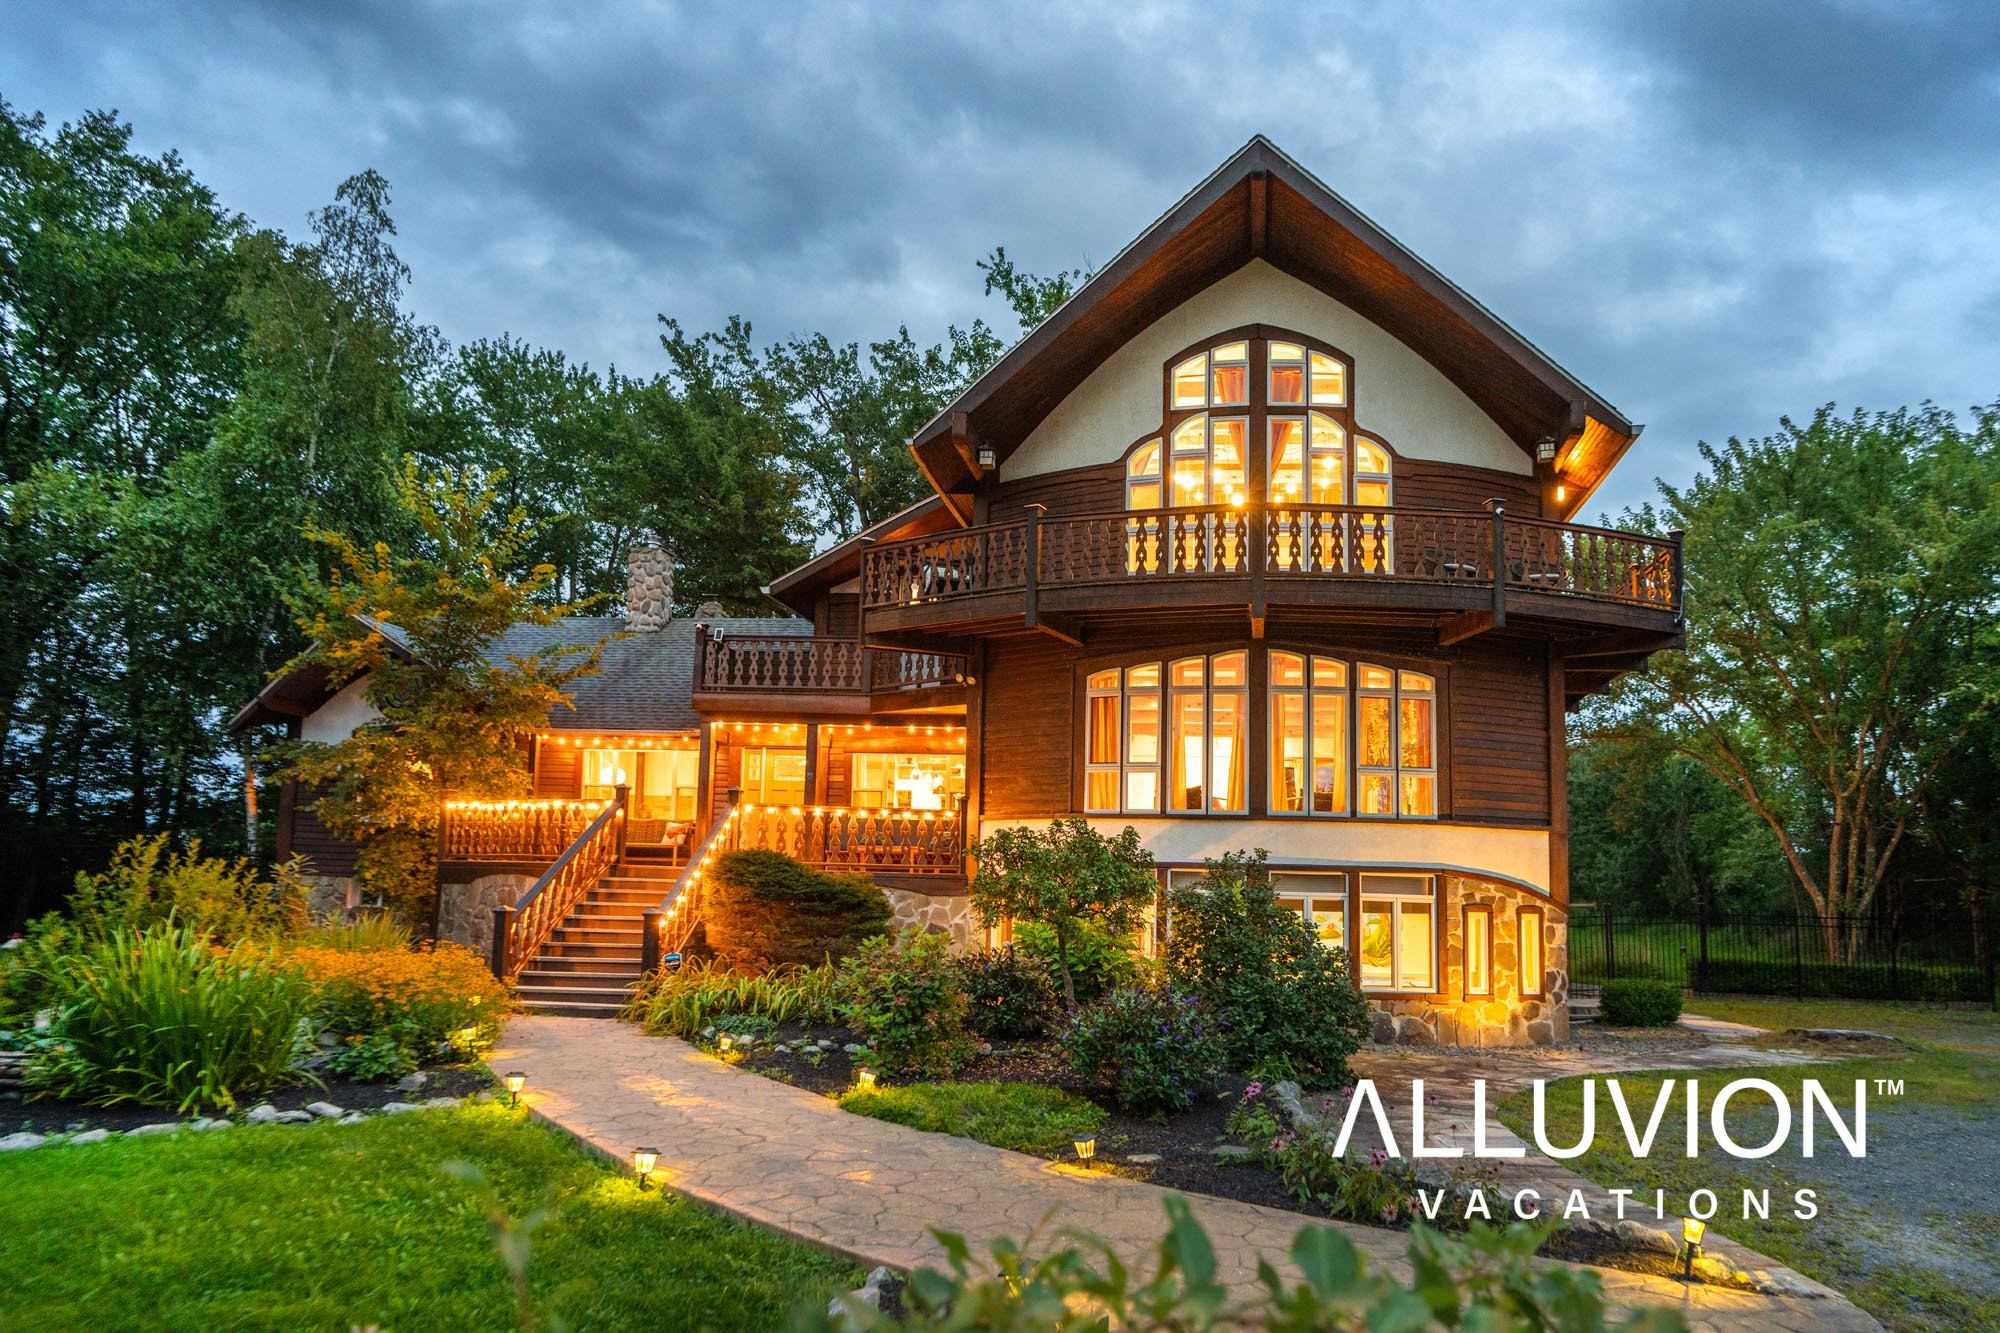 Airbnb Reviews – Alluvion Vacations – Hudson Valley & Catskills